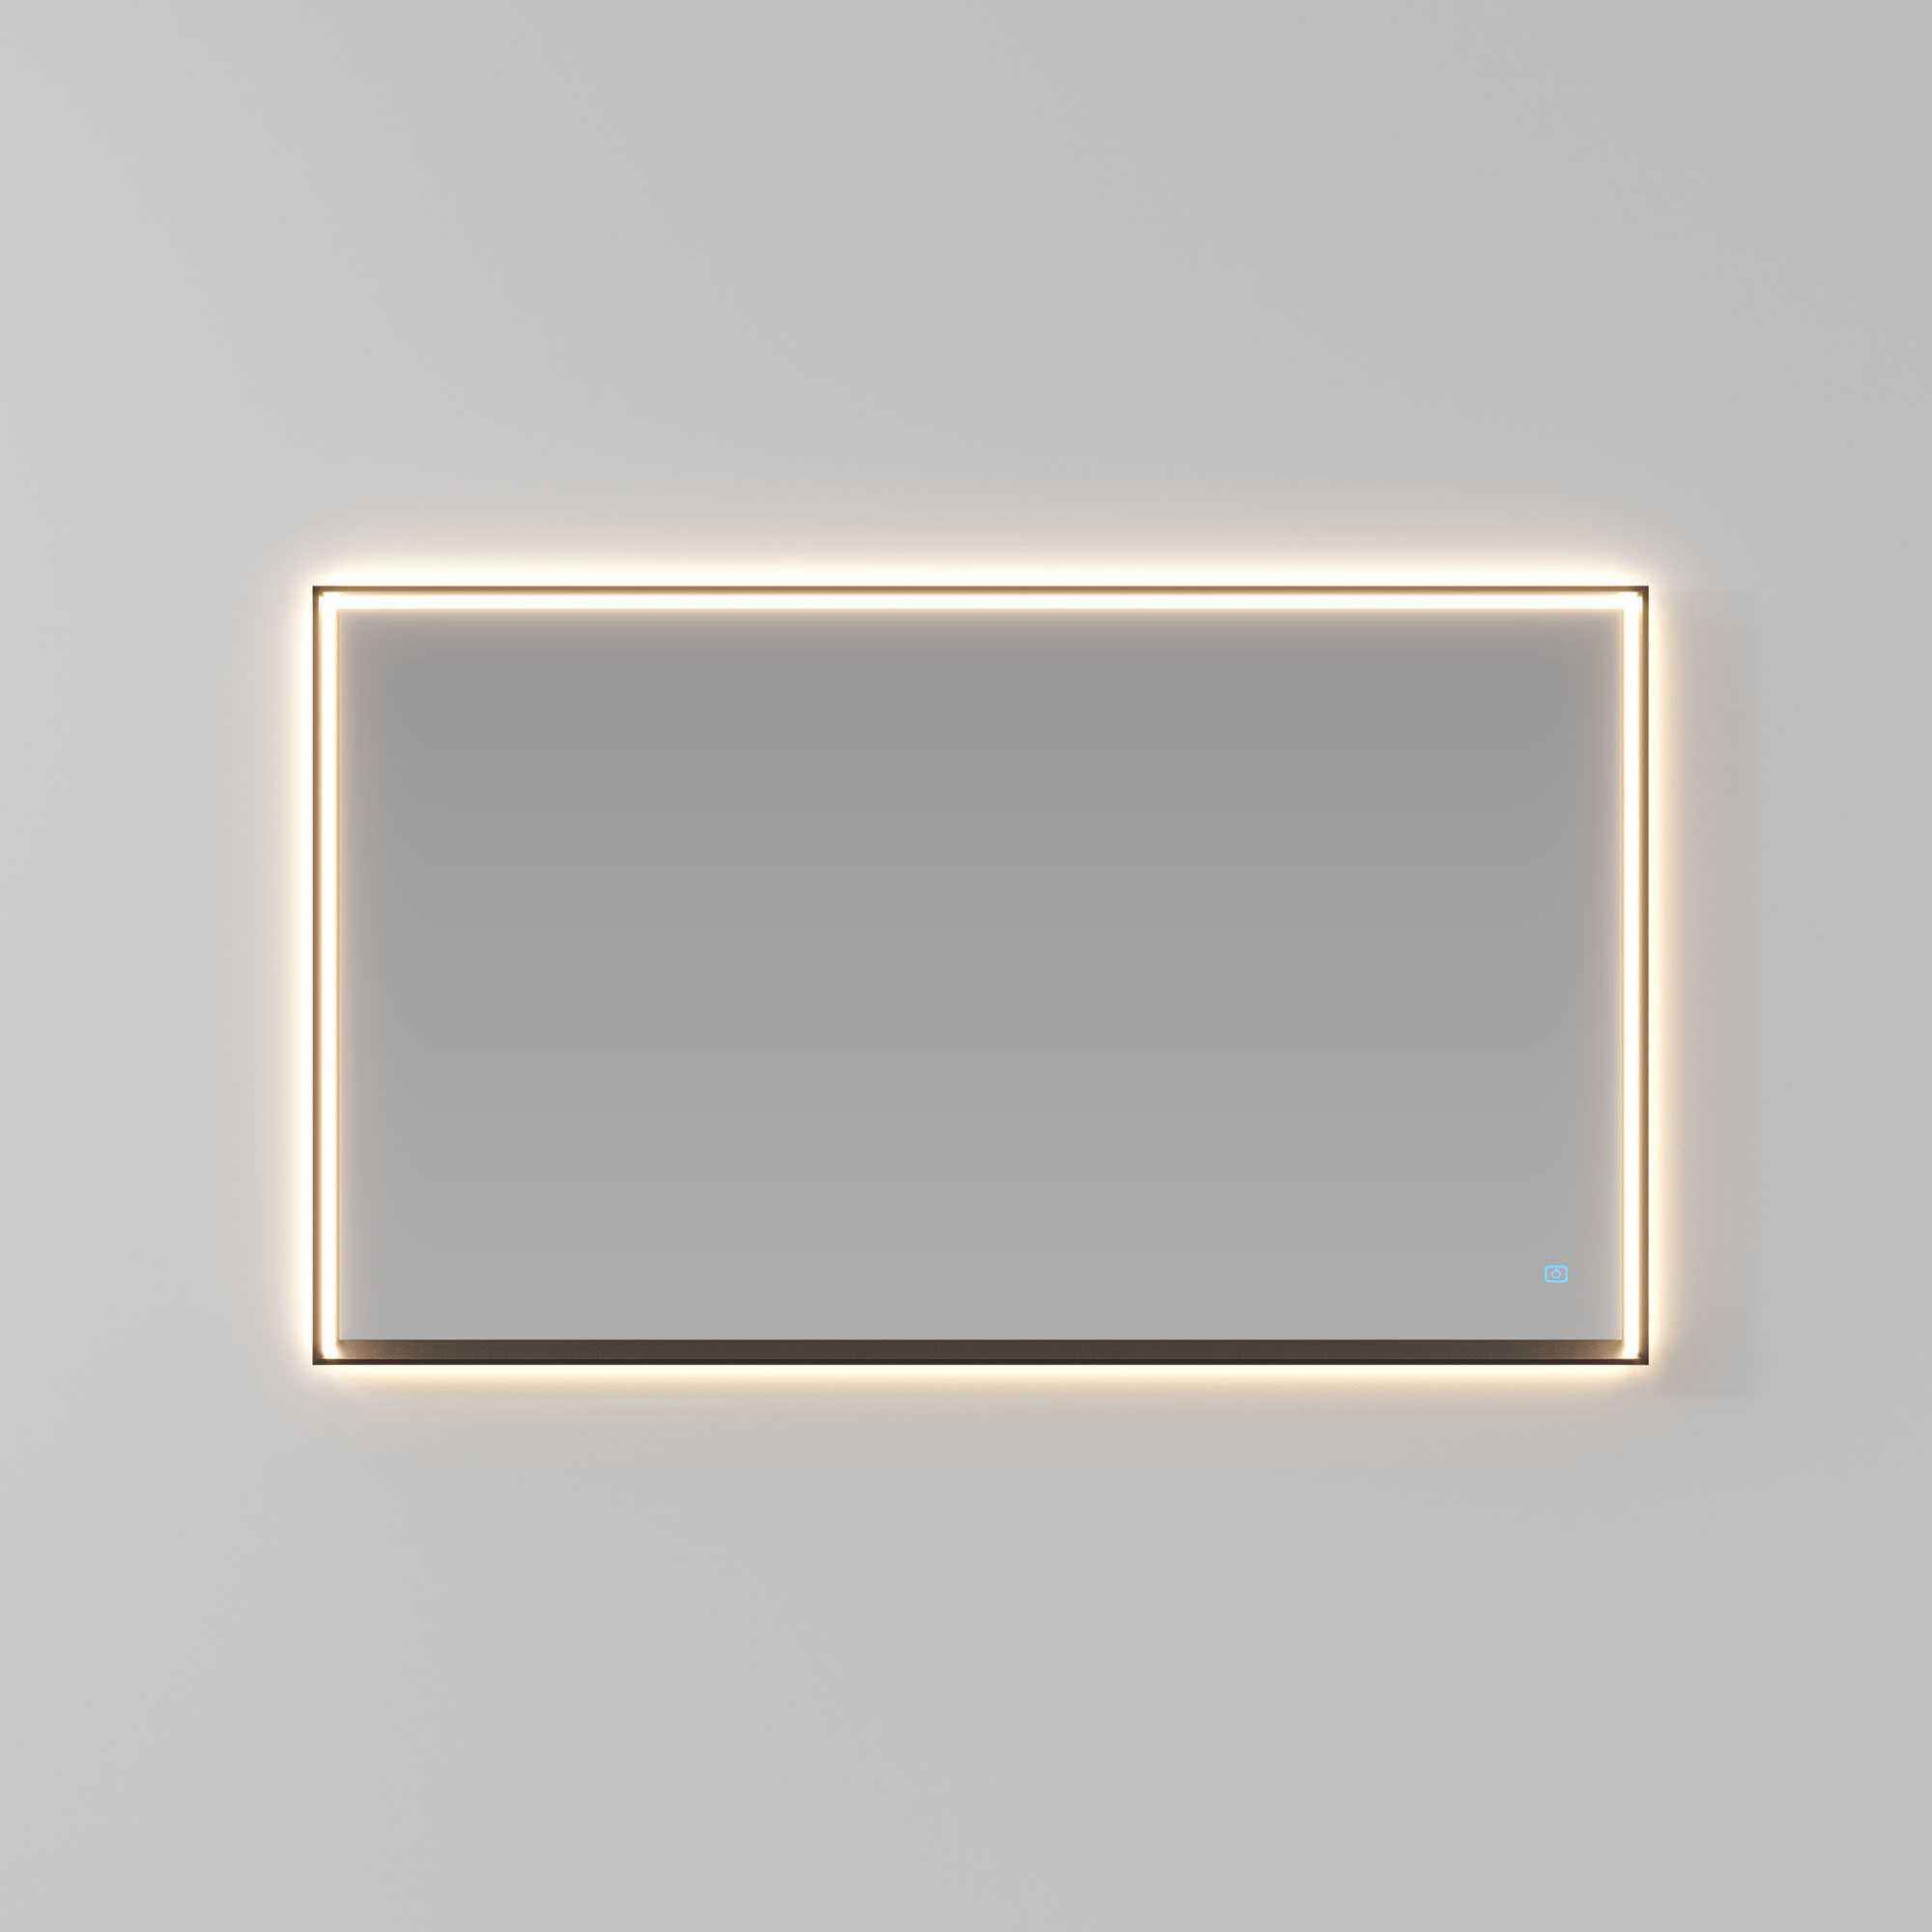 Tecnica-Up backlit mirror with side lights